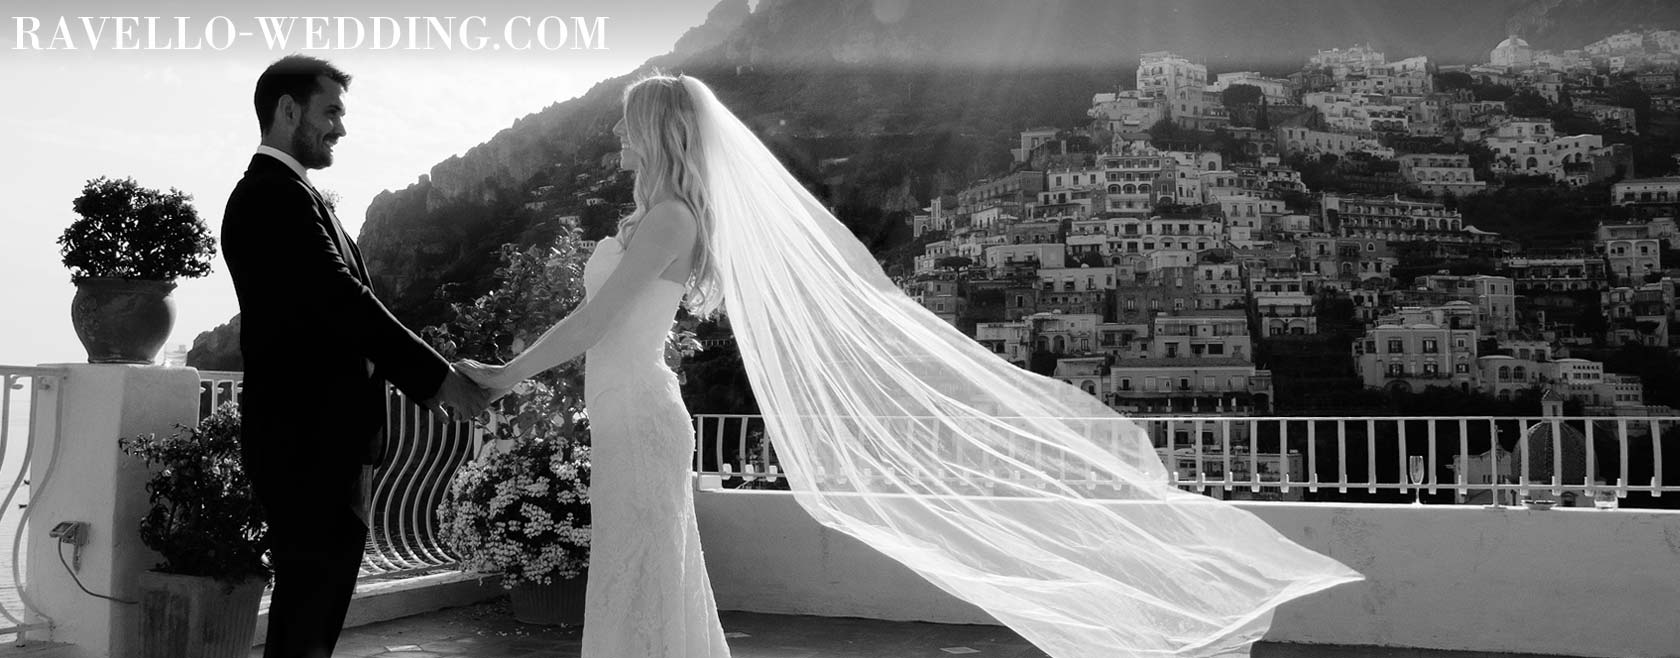 Ravello wedding photographer